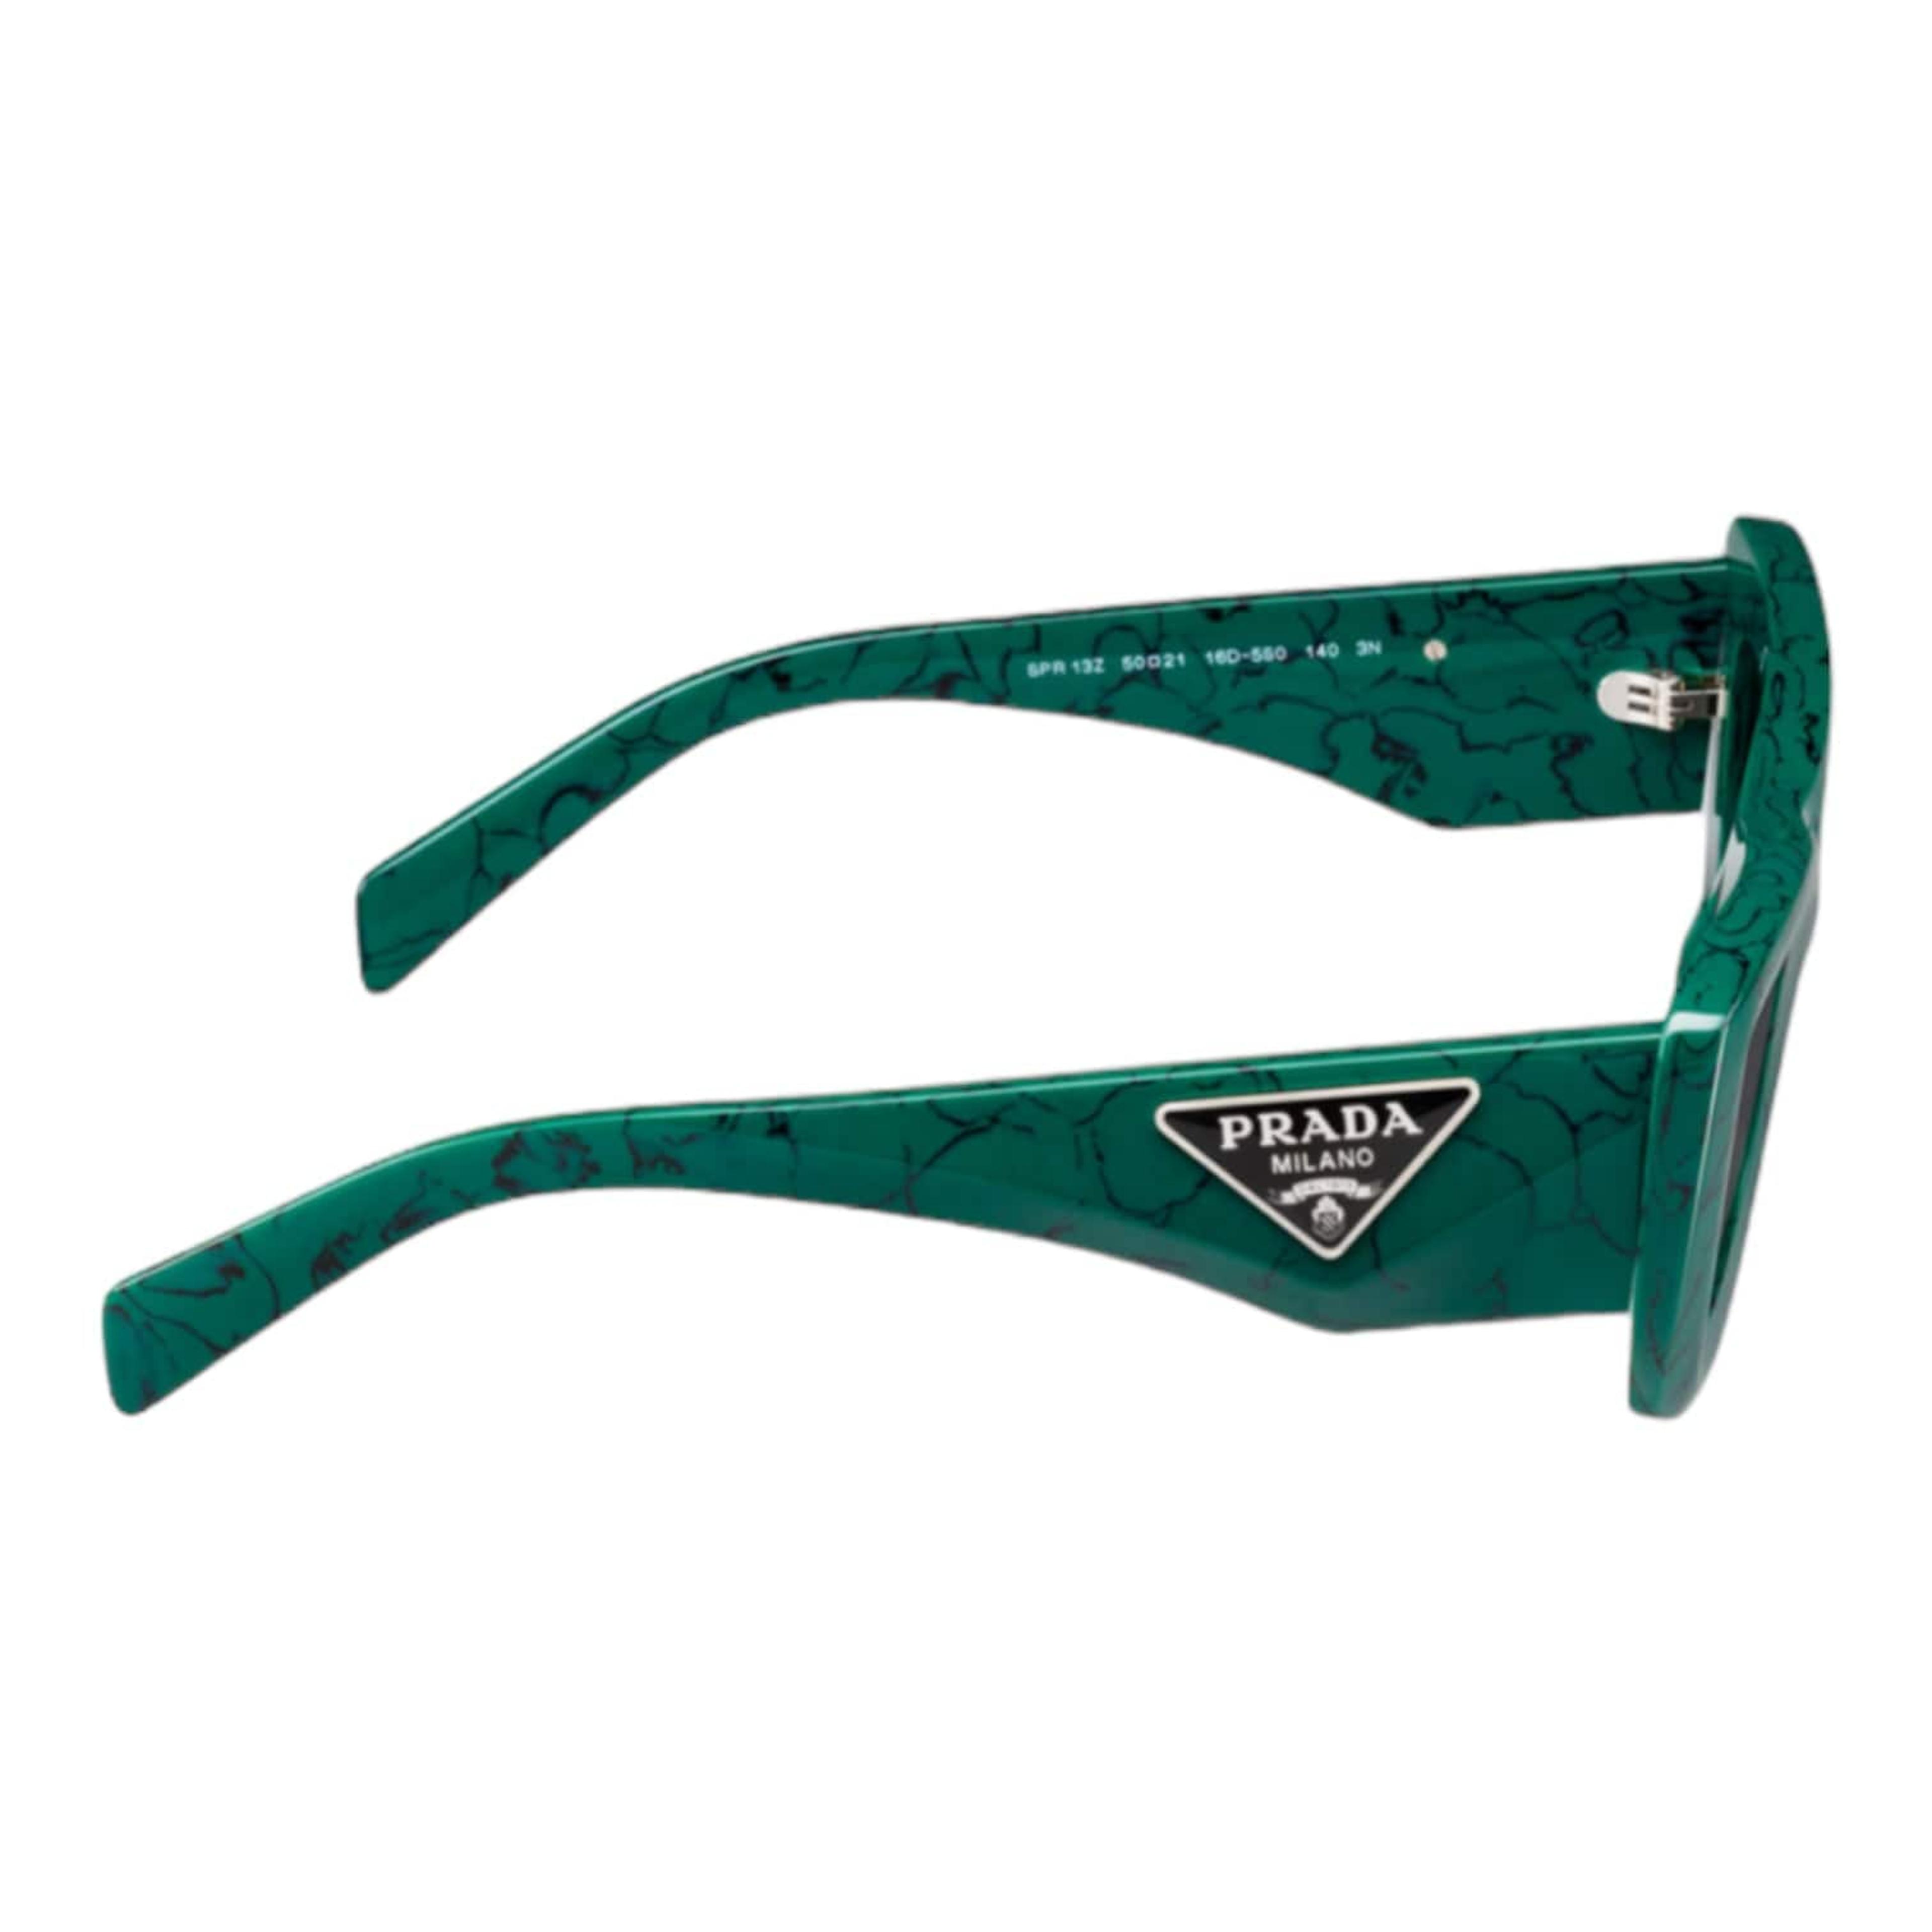 Alternate View 2 of Prada Symbole Glasses Marbleized Green